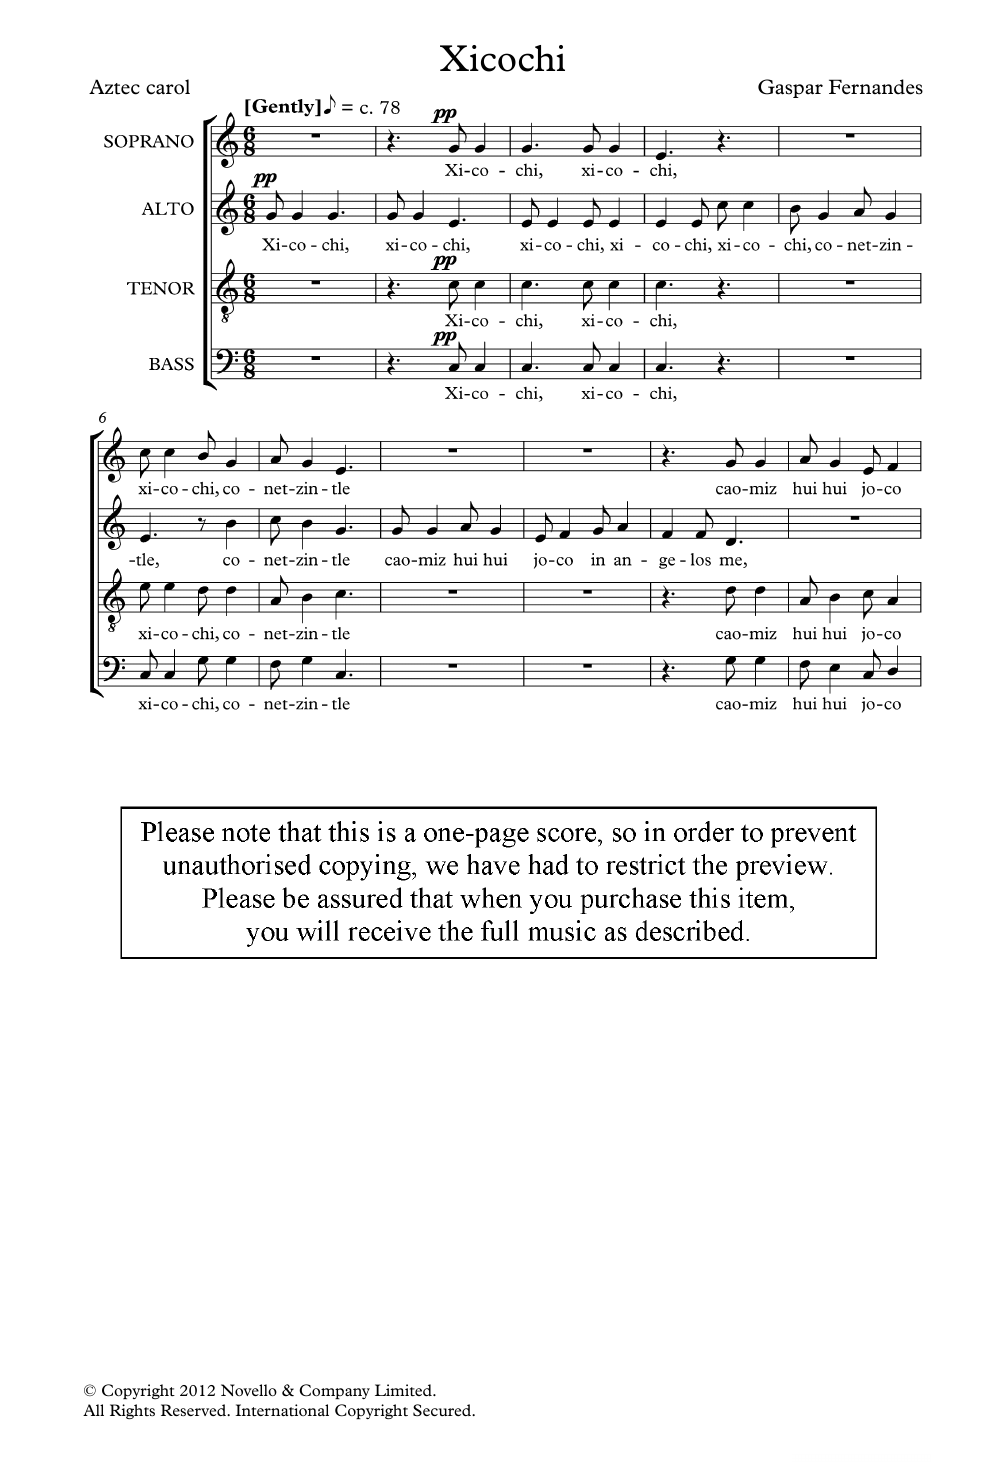 Gaspar Fernandes Xicochi Sheet Music Notes & Chords for Choir - Download or Print PDF